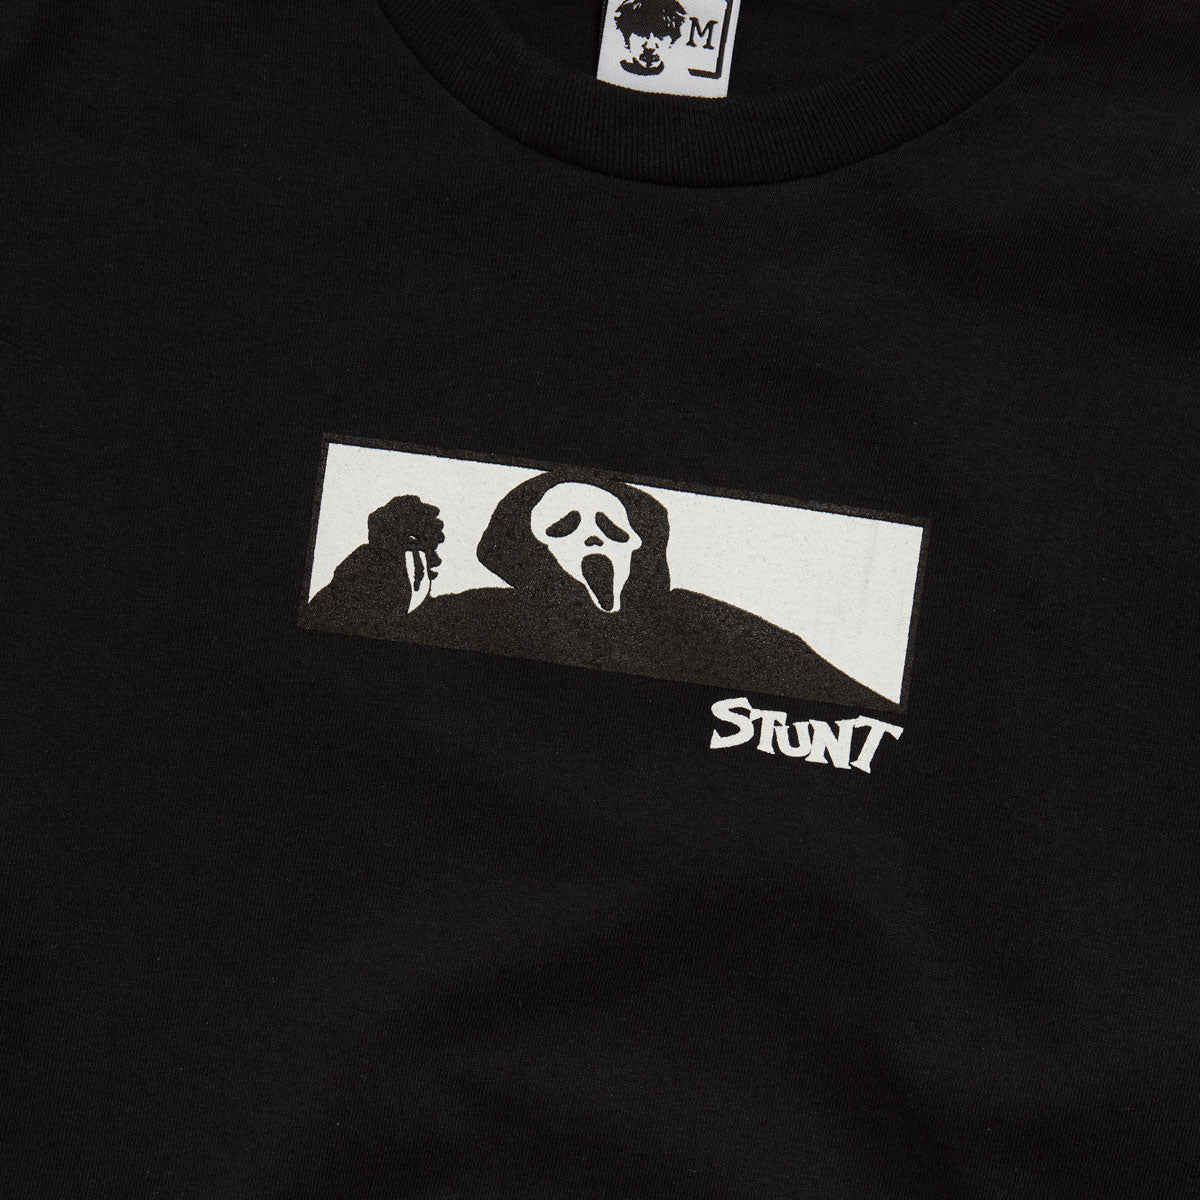 Stunt Small Ghostface Long Sleeve T-Shirt - Black image 2